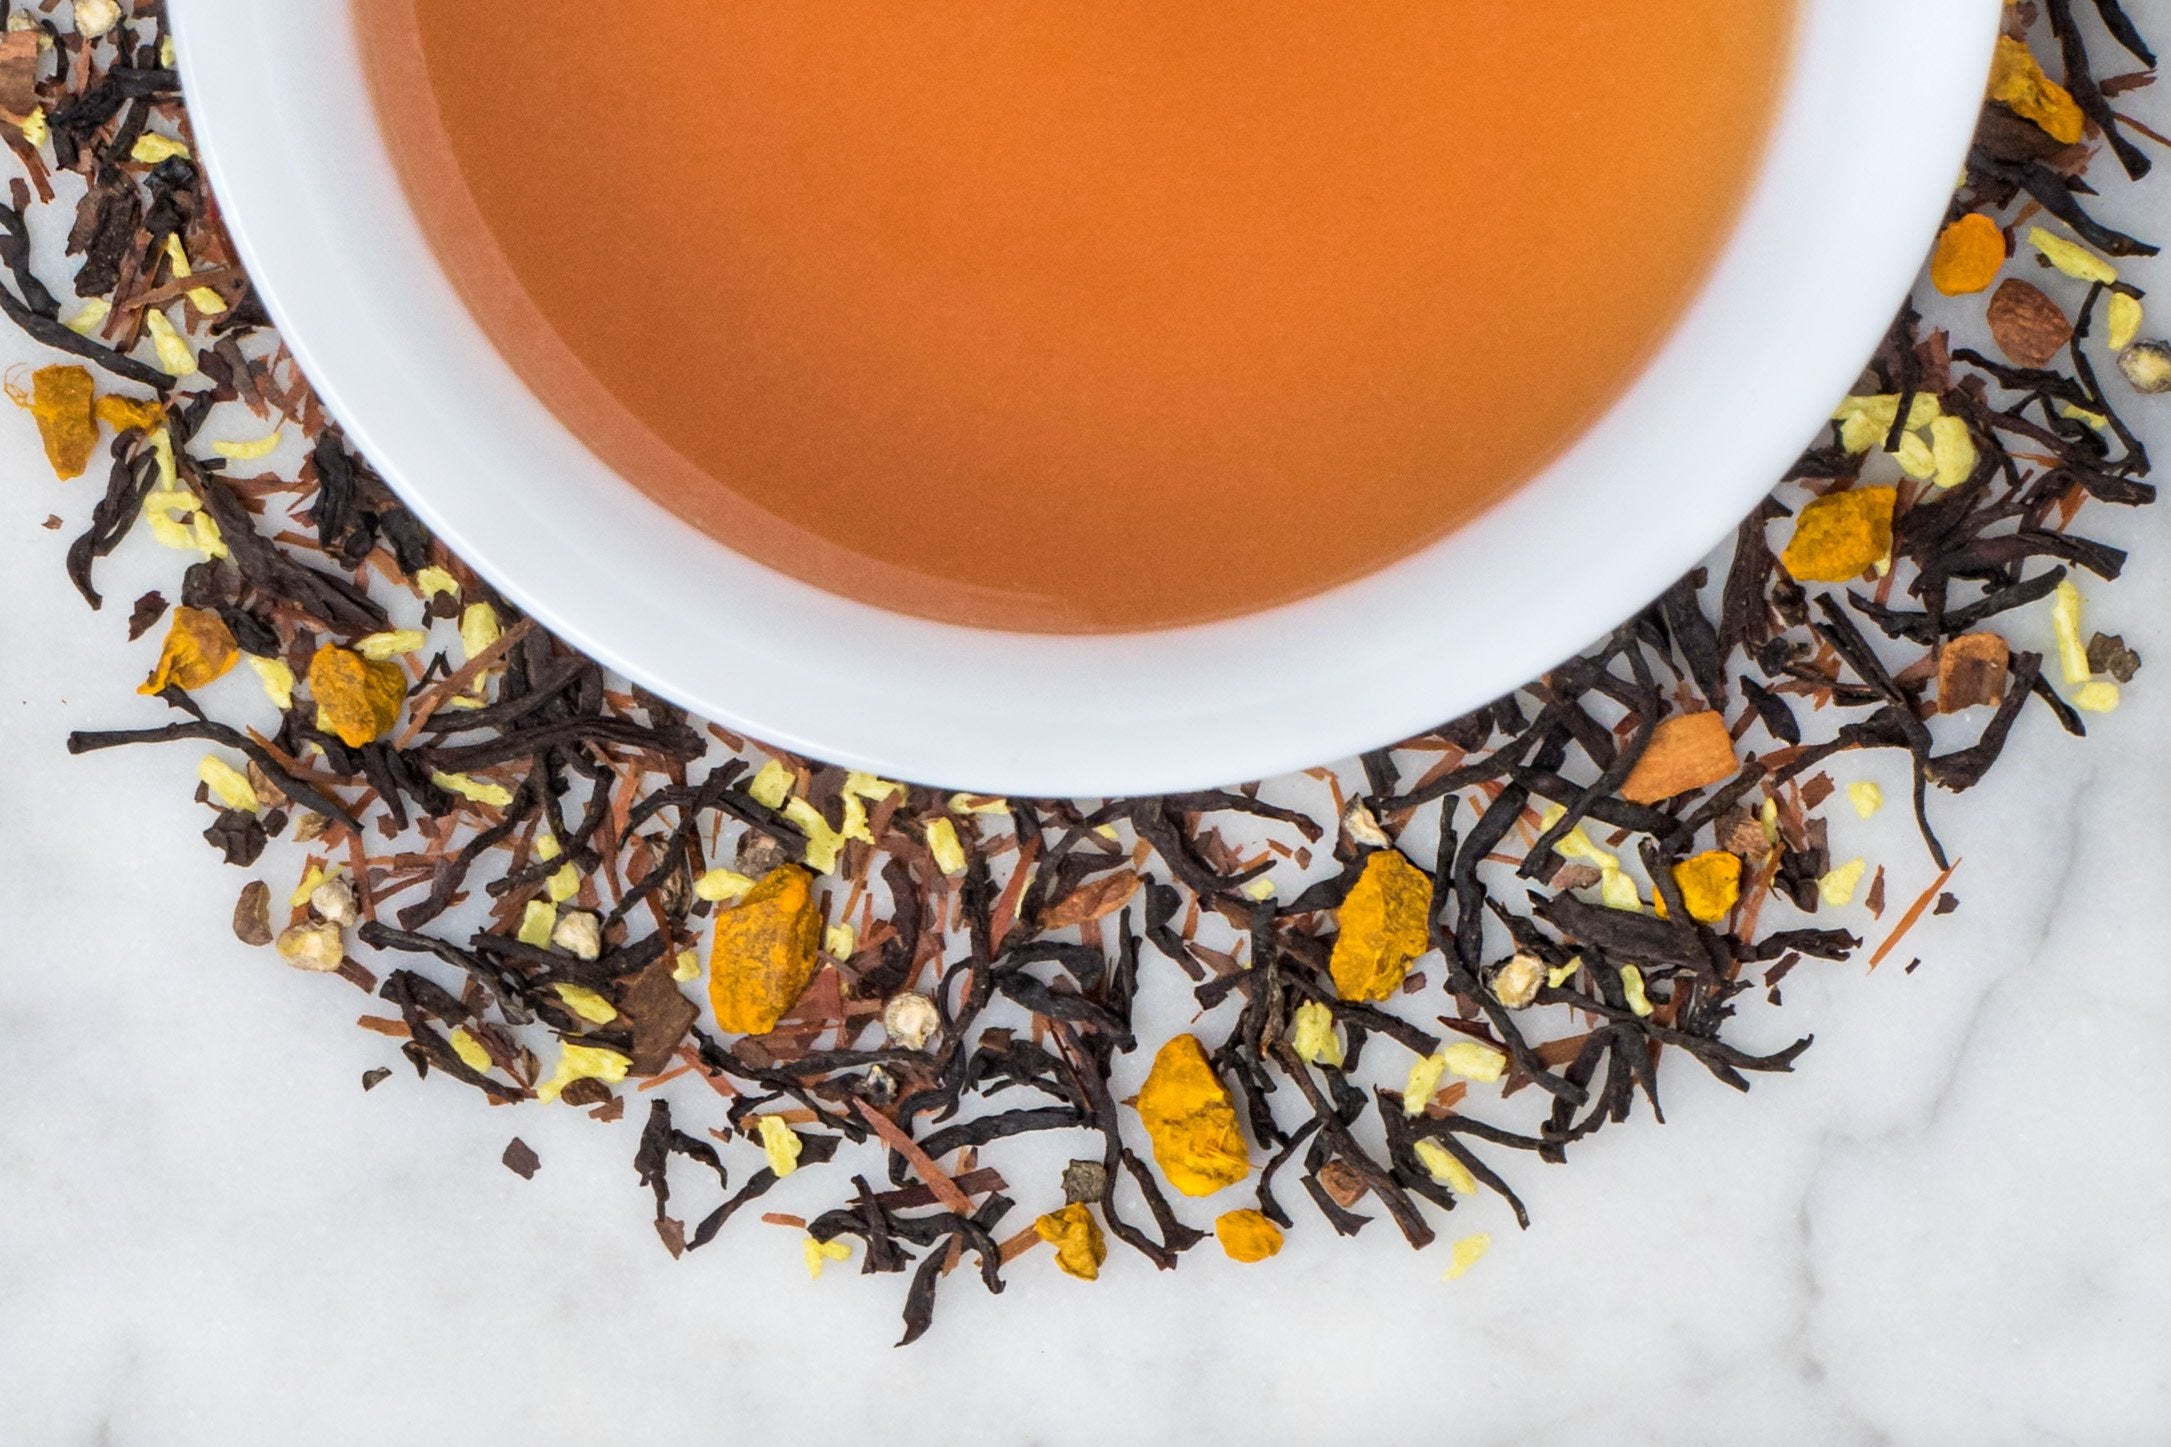 Organic Rwanda Rukeri Black Tea and Spices Surround A Brewed Cup of Tea